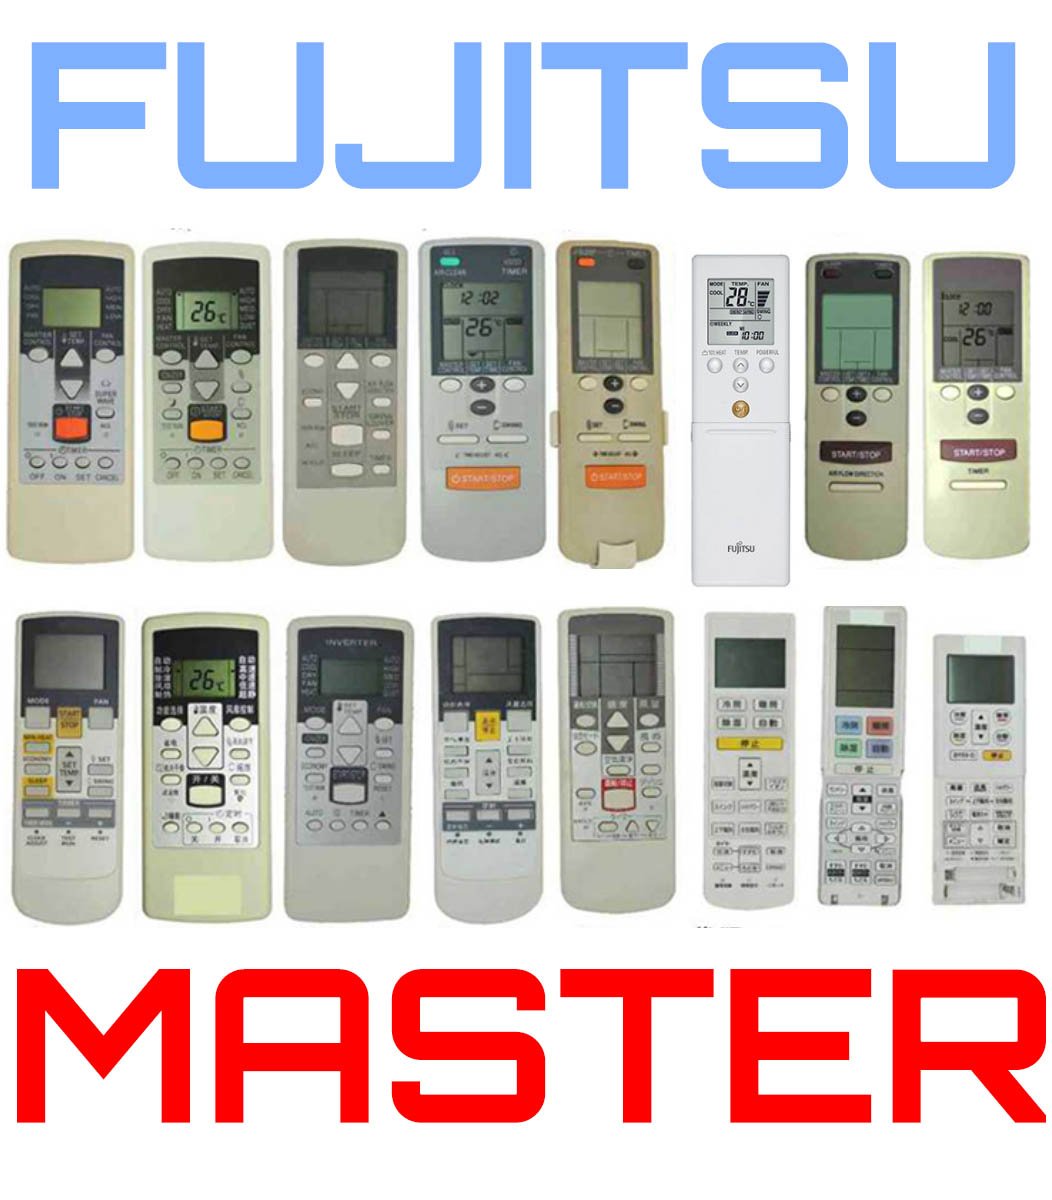 Master Universal Air Conditioner Remote - For All Fujitsu AC Remotes